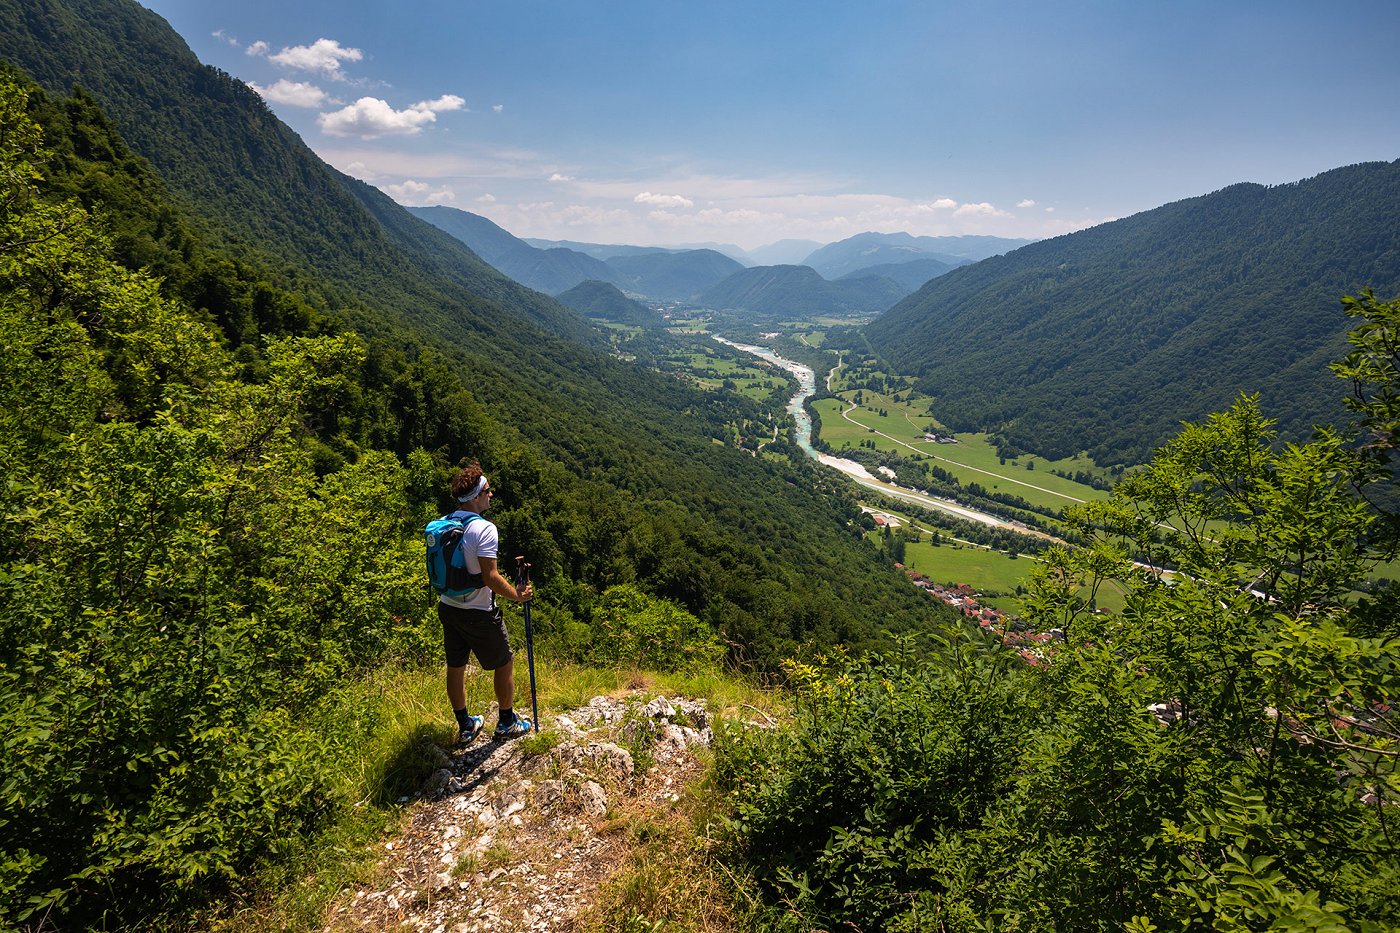 Dolina_Soce_Alpe-Adria-Trail_Jost_Gantar.jpg